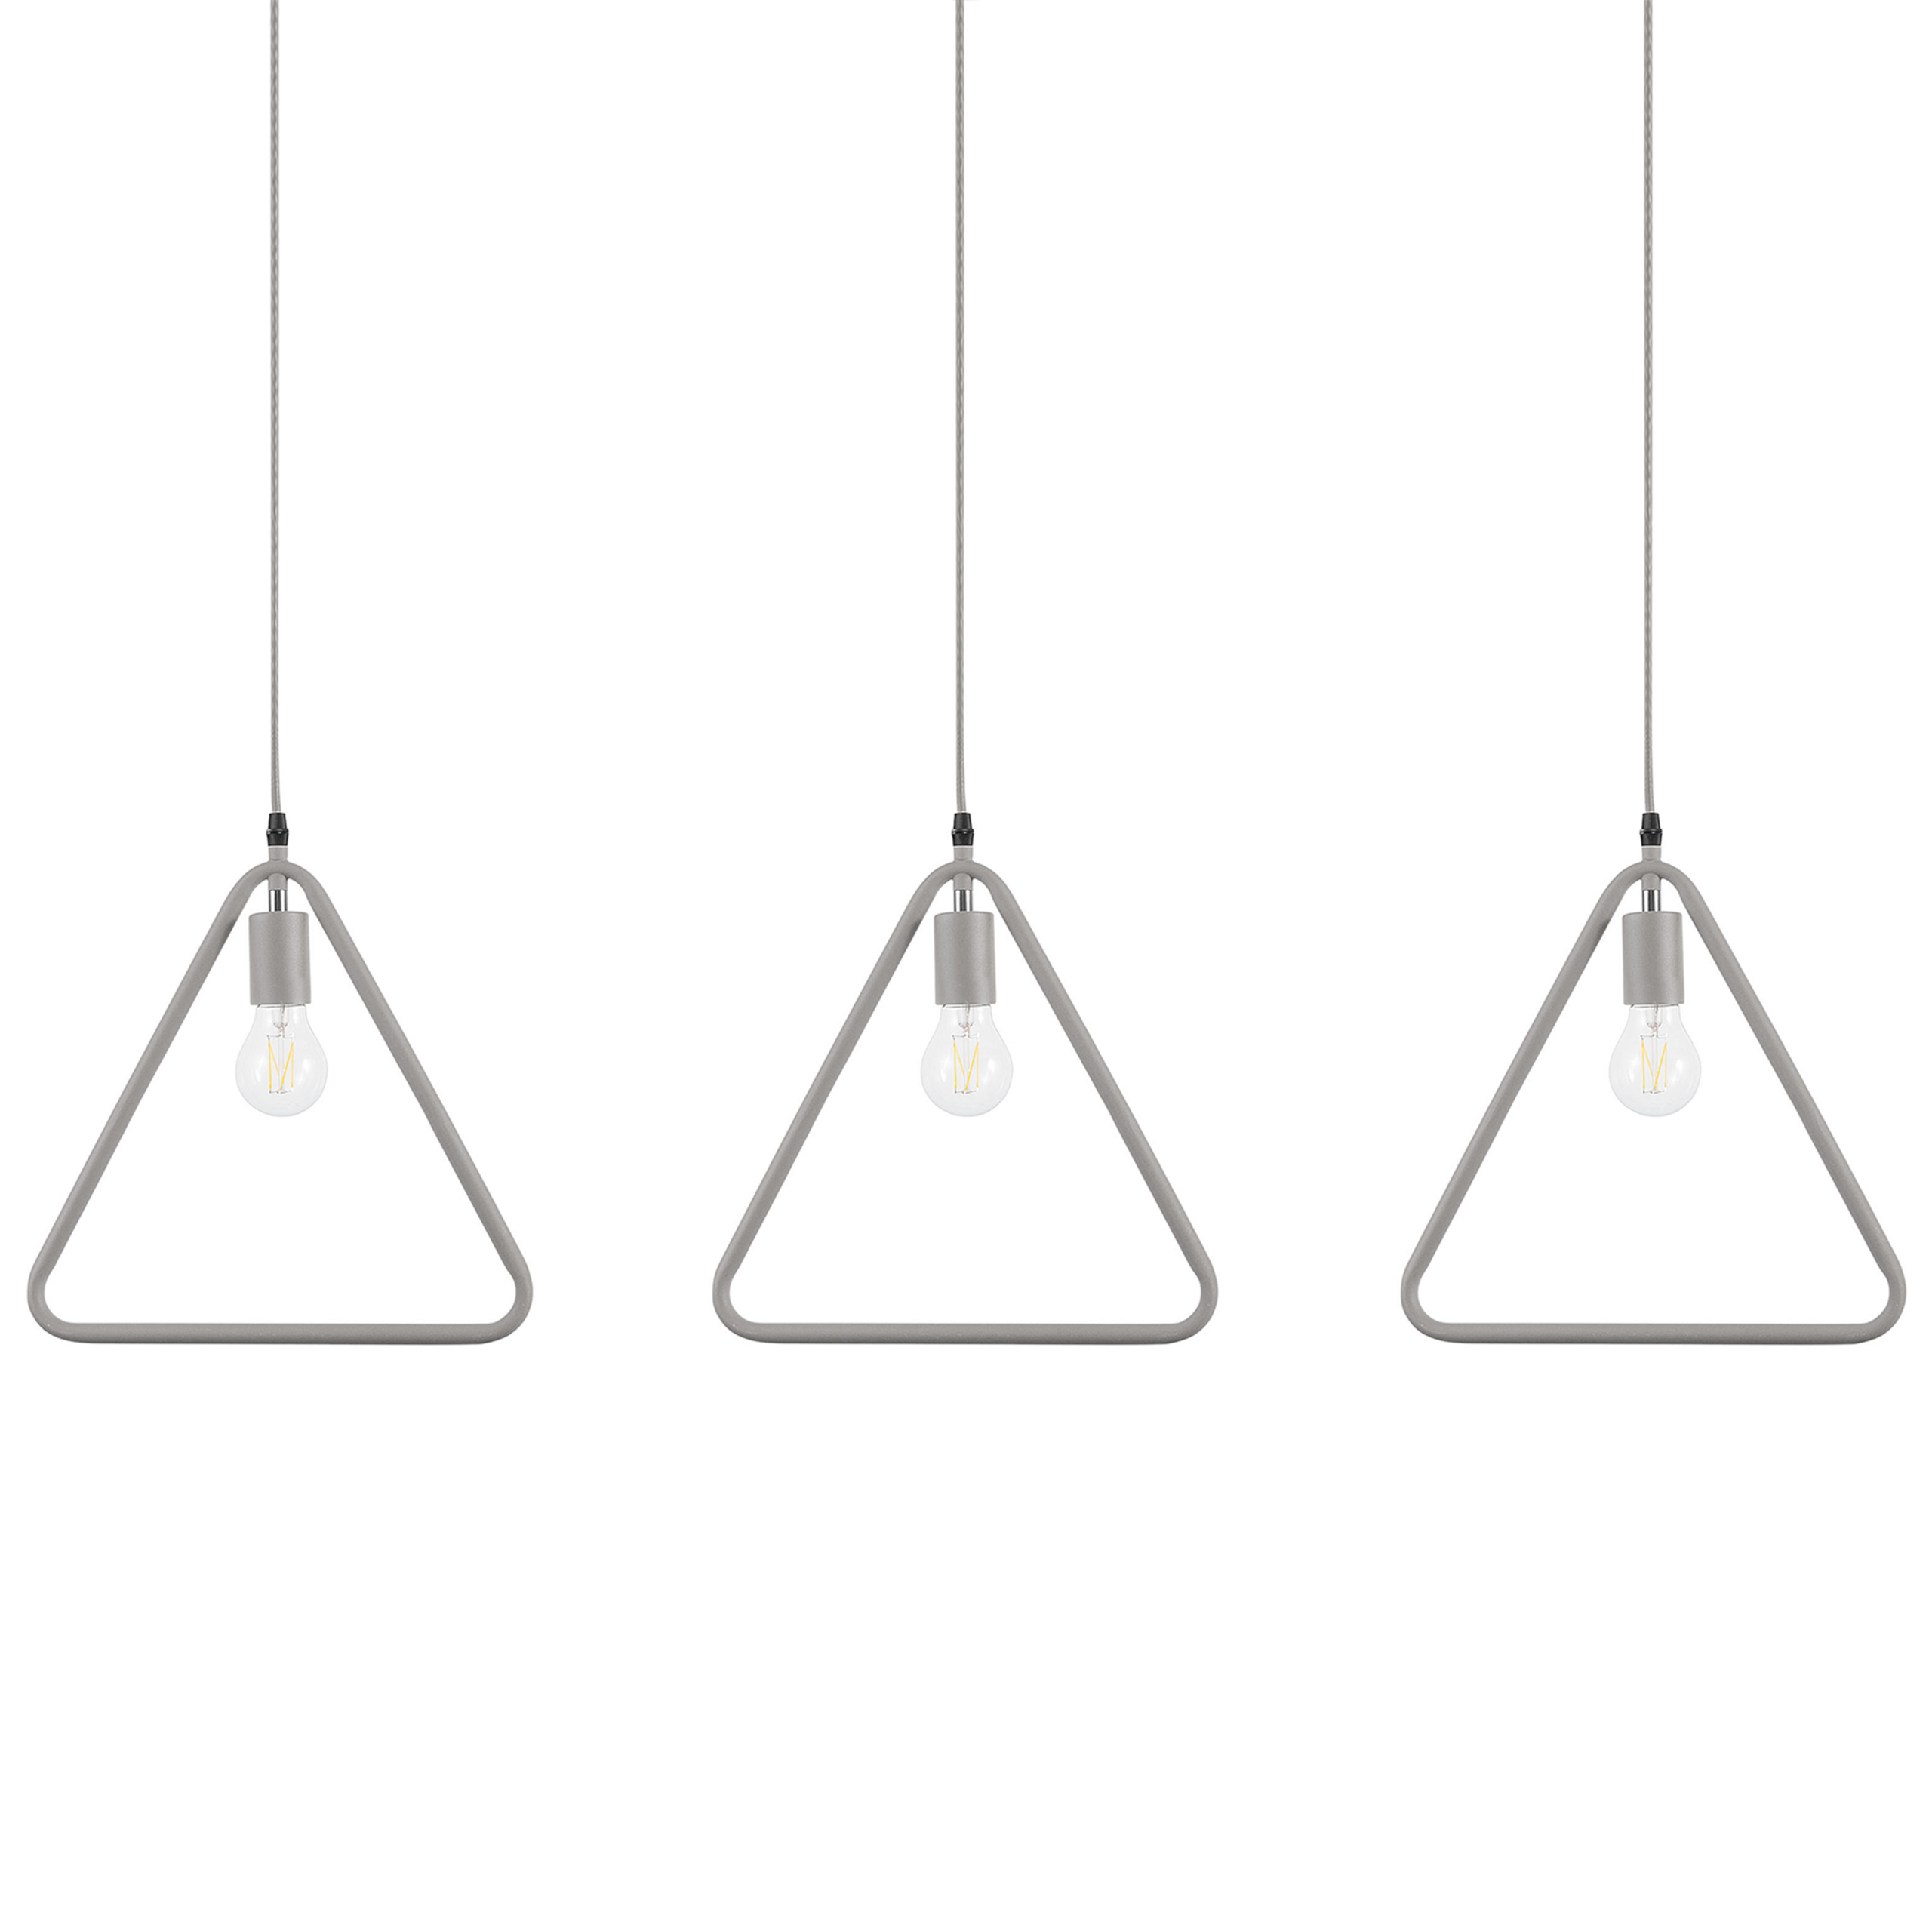 Beliani Set of 3 Ceiling Lamps Grey Metal Triangle Shade Pendant Industrial